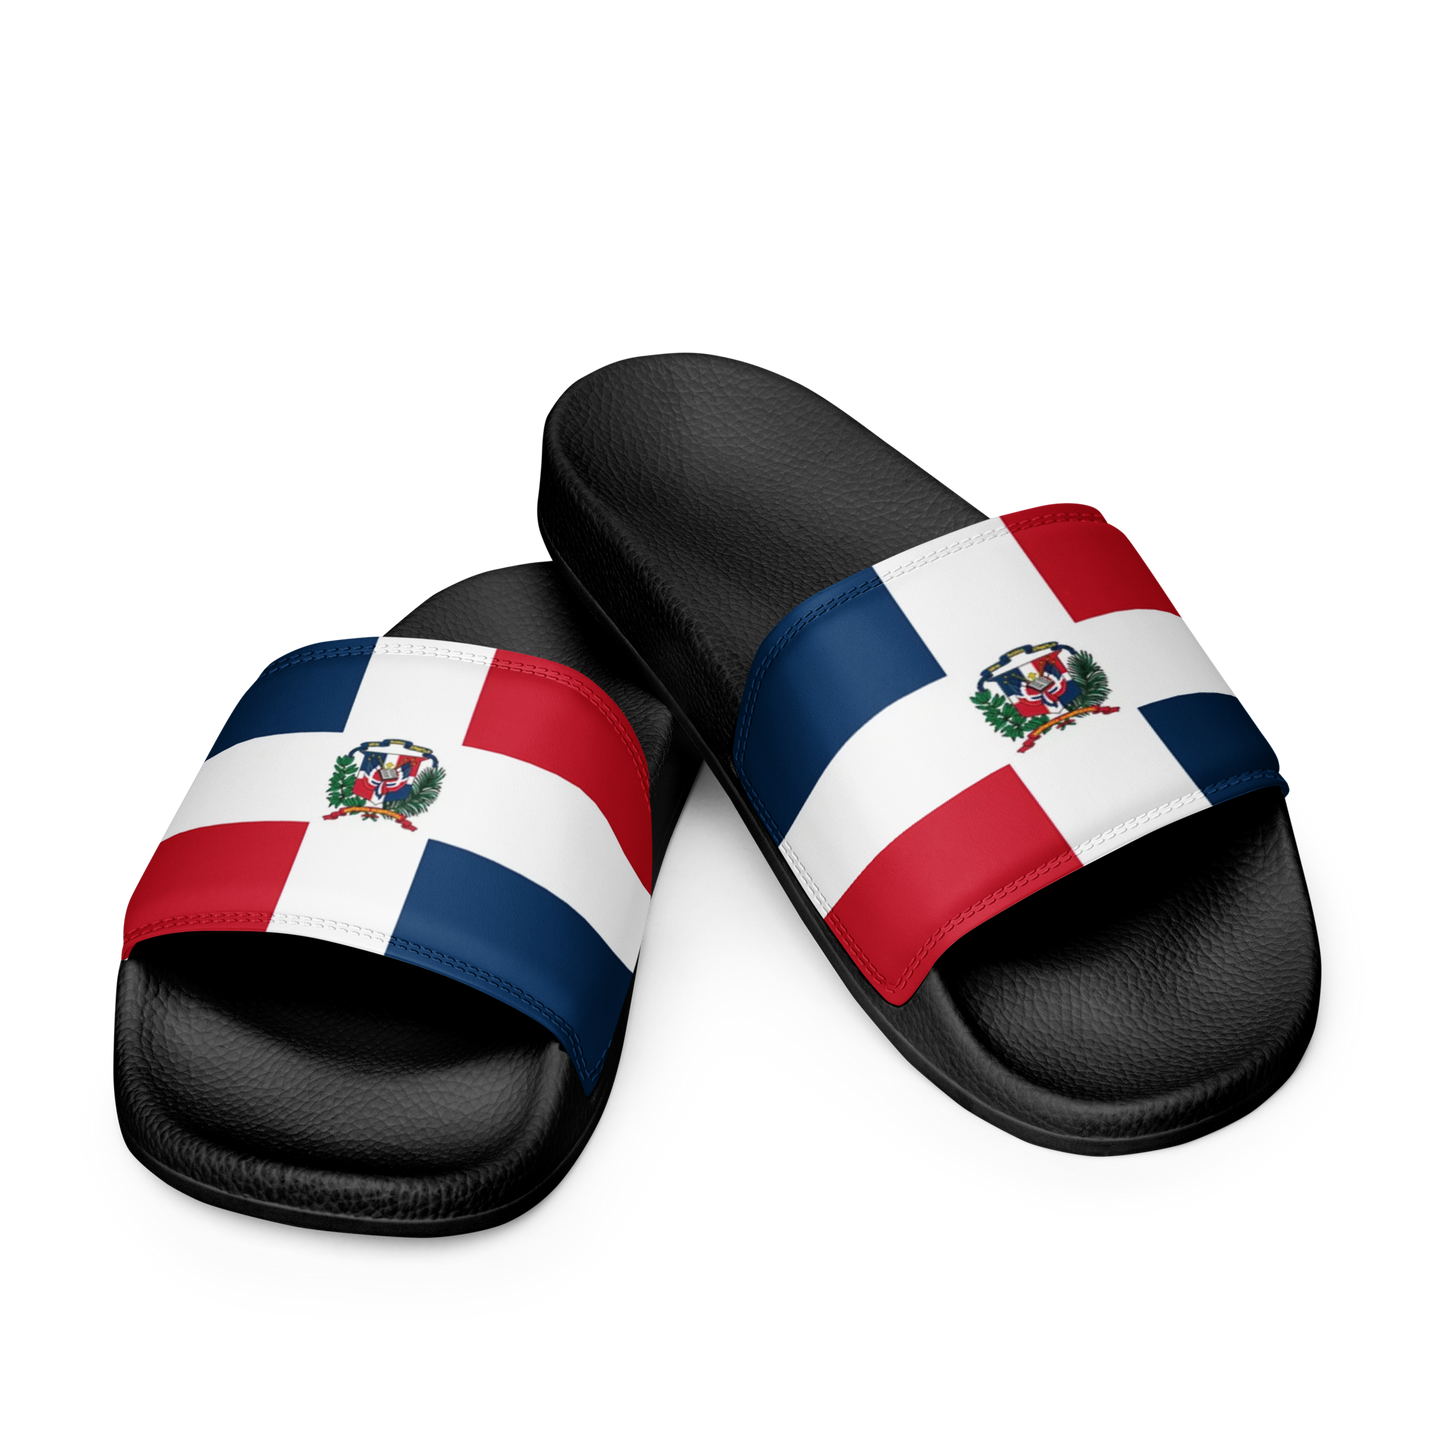 Dominican Rep. Women's slides